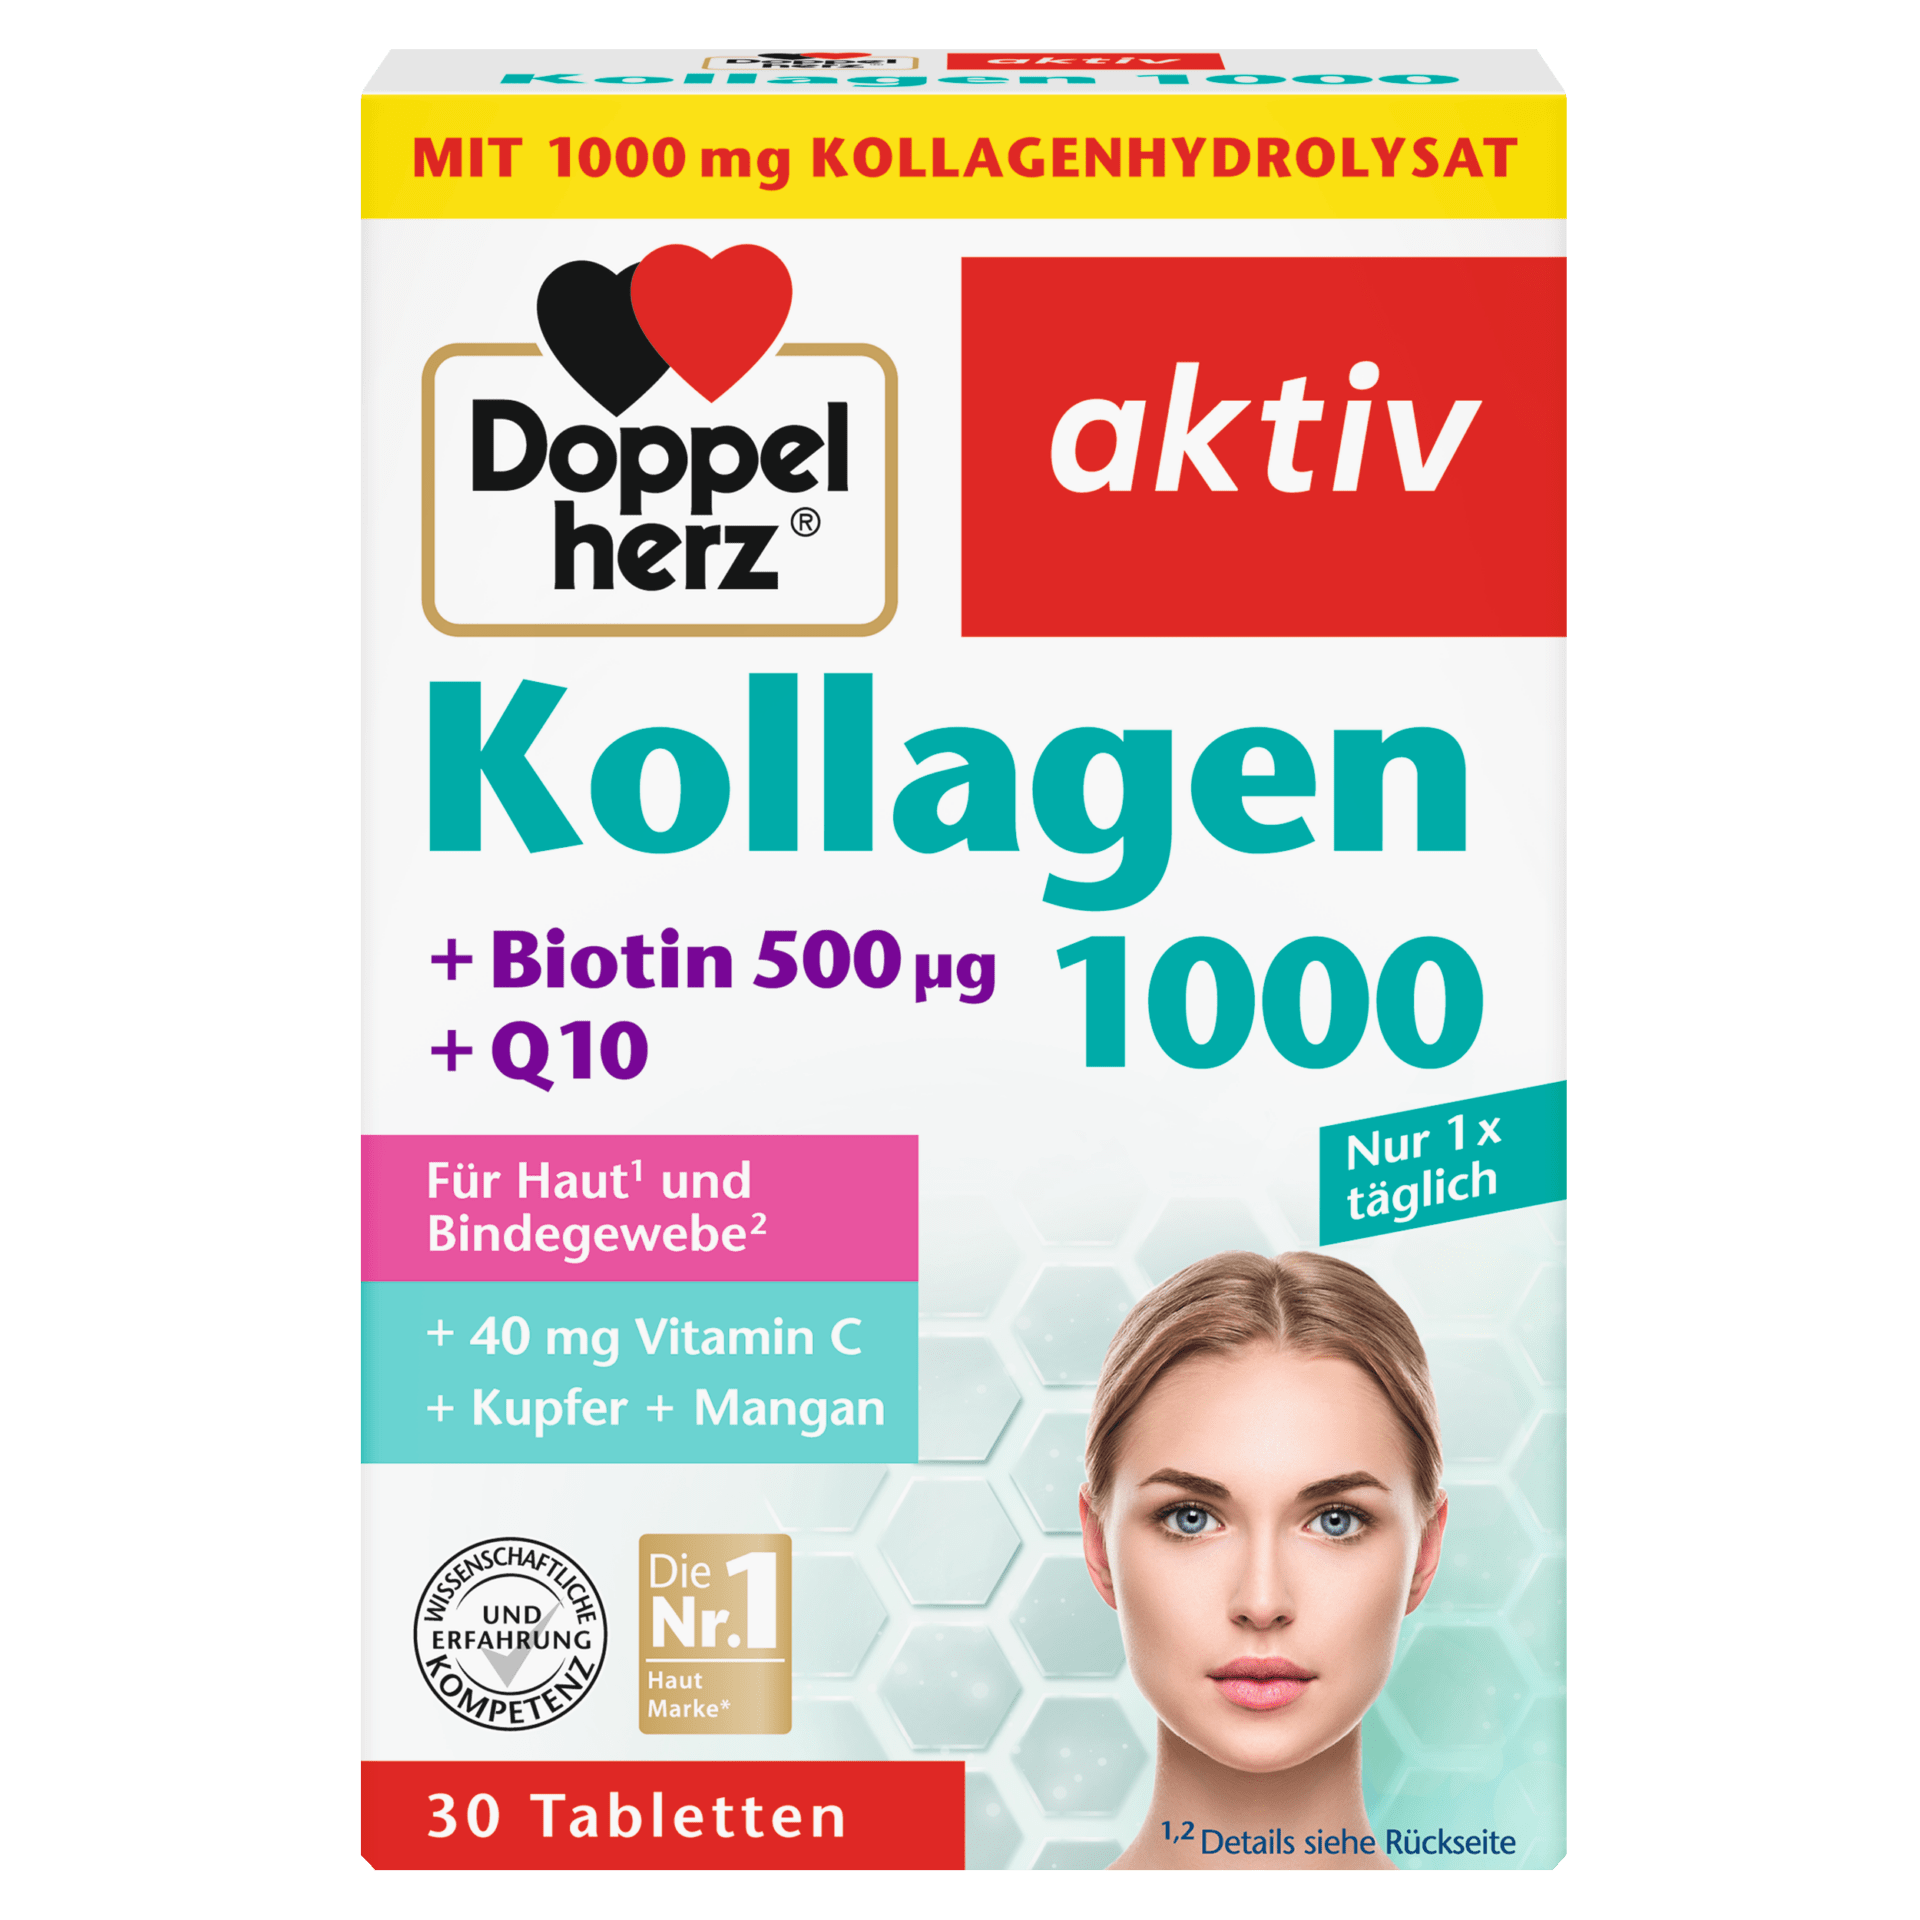 Doppelherz Aktiv Kolagen 1000 + 500 mcg biotina + Q10 tablete, 30 tablet